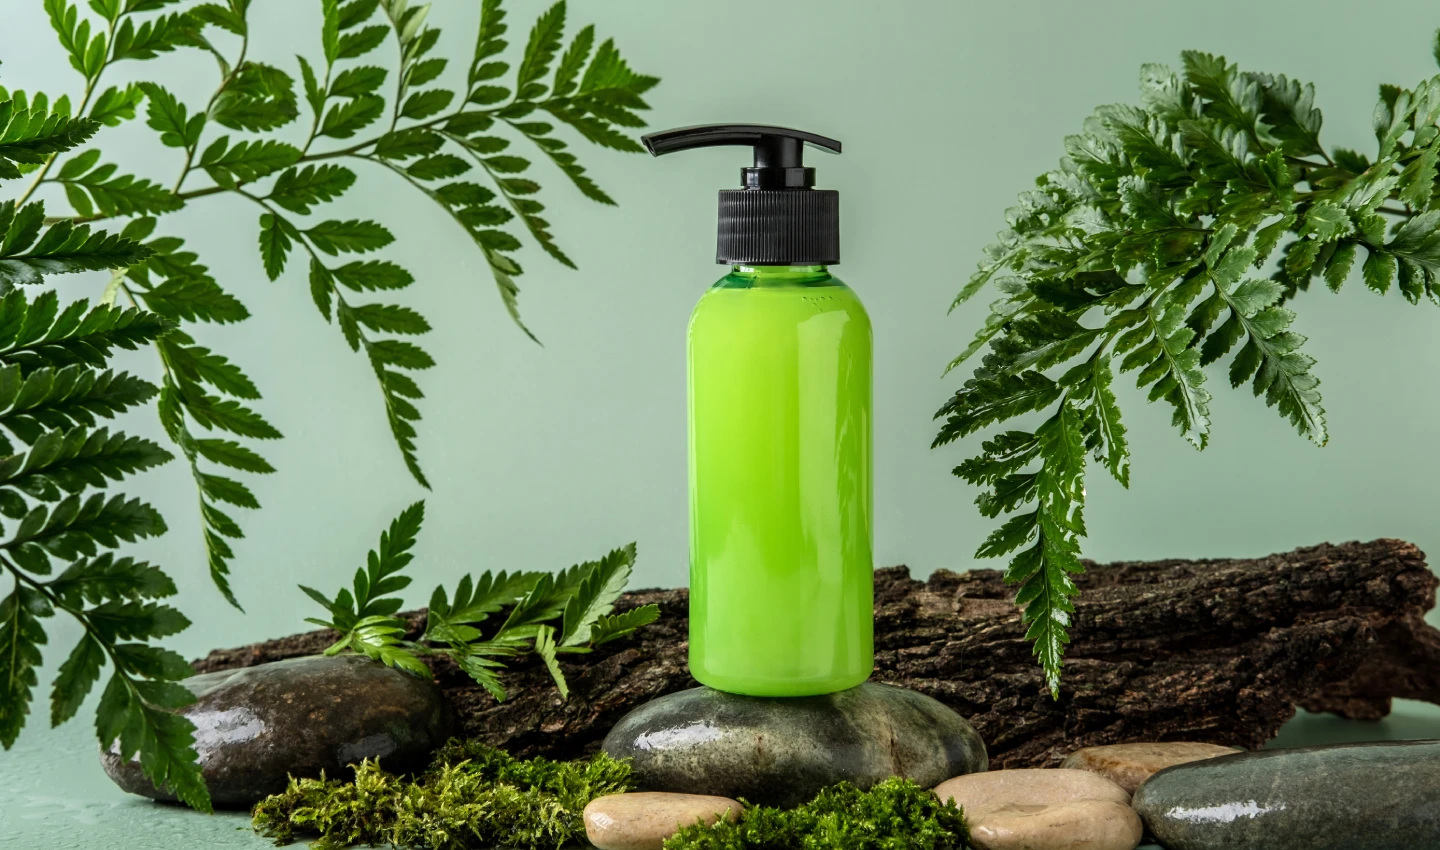 A shampoo bar, an eco-friendly alternative to traditional liquid shampoo, sits on a wooden surface